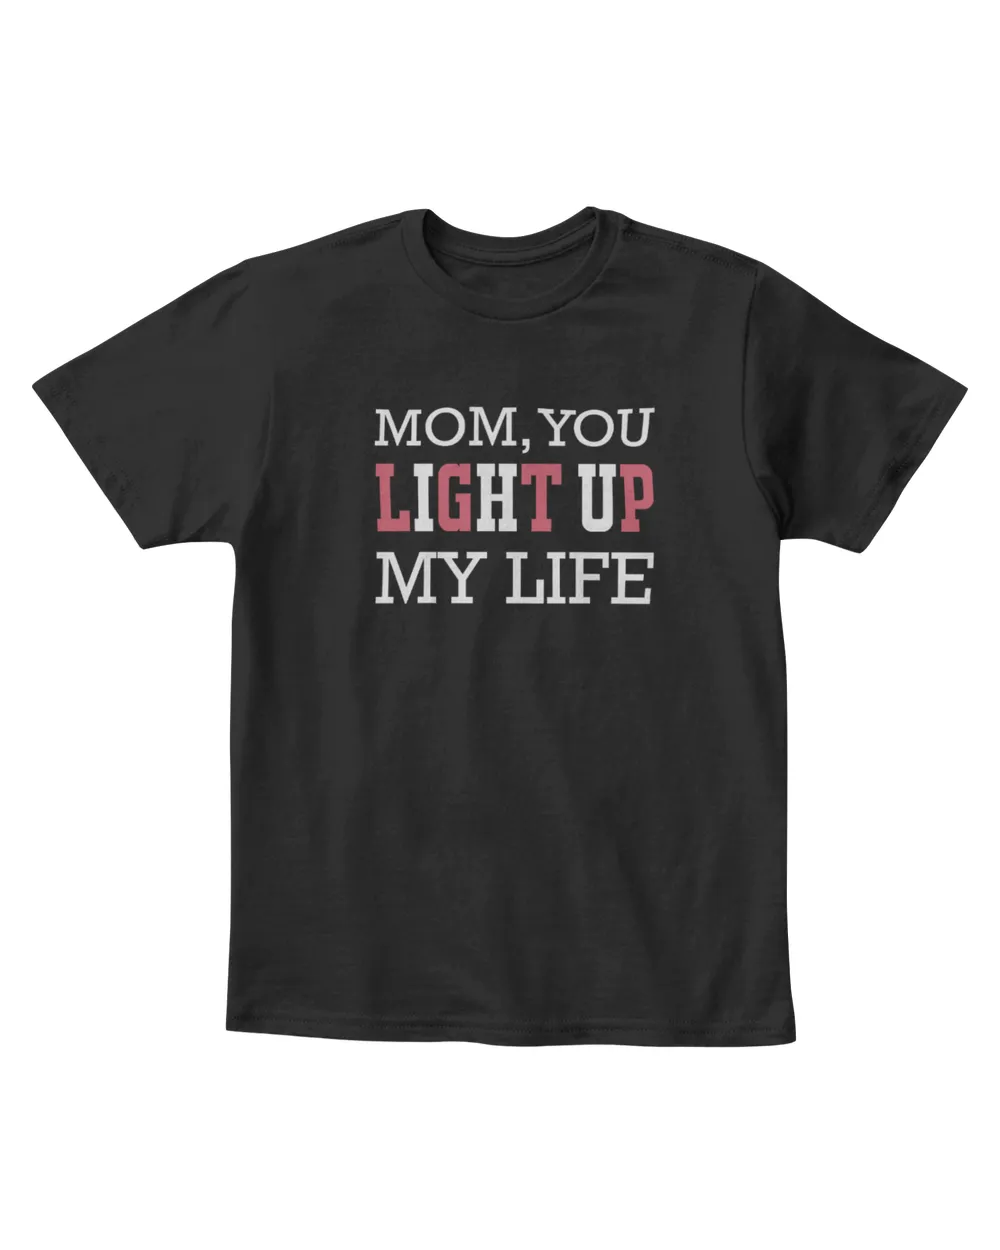 Mom, you light up my life t shirt